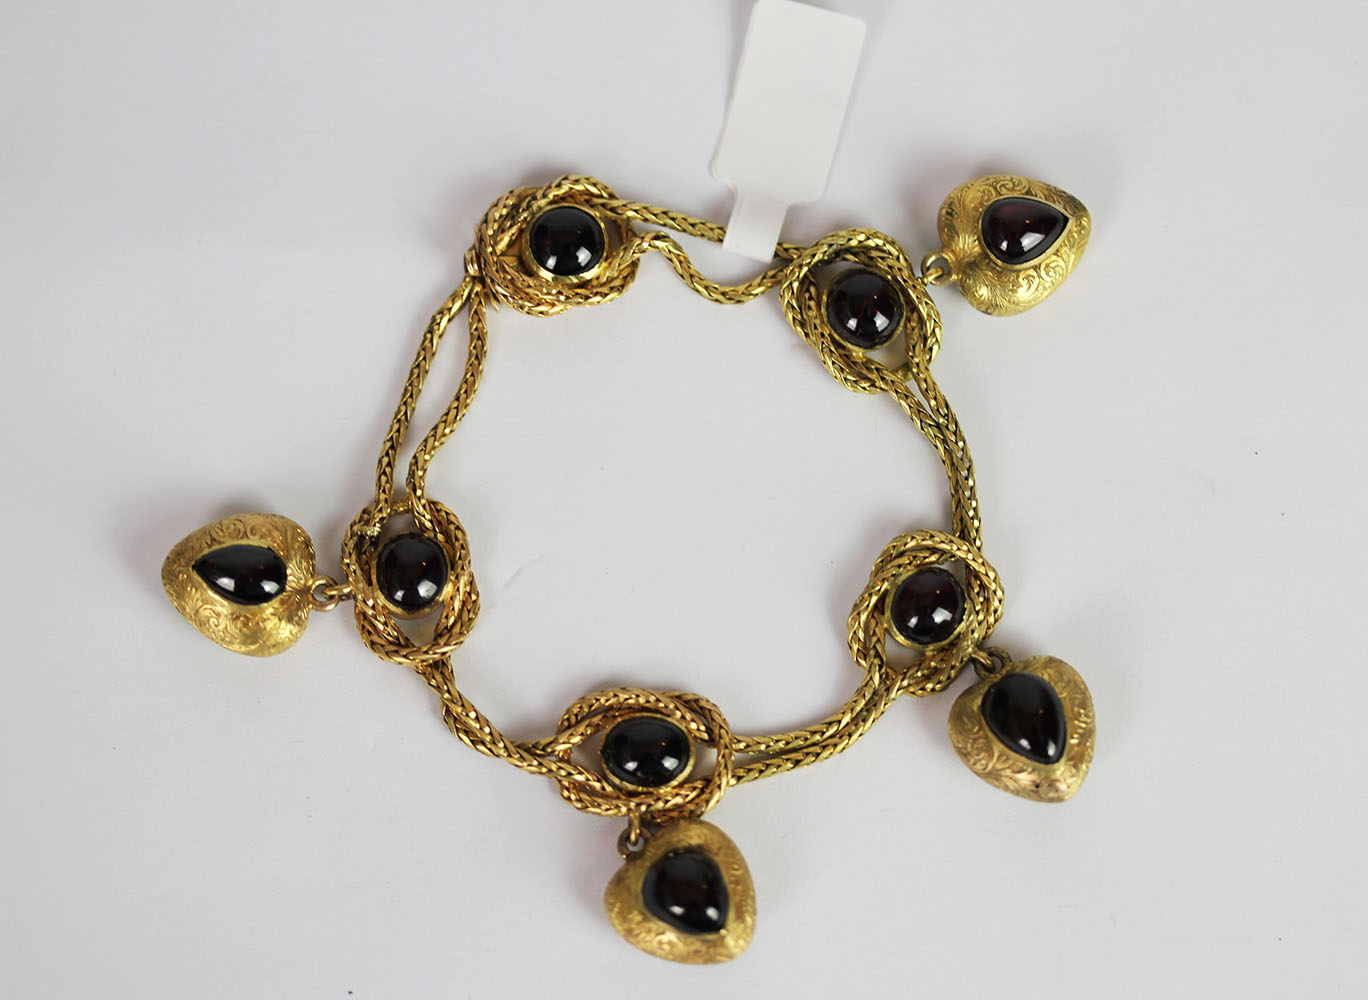 Garnet set charm bracelet, set with a total of 9 cabochon garnets, 4 dangling heart charms, not